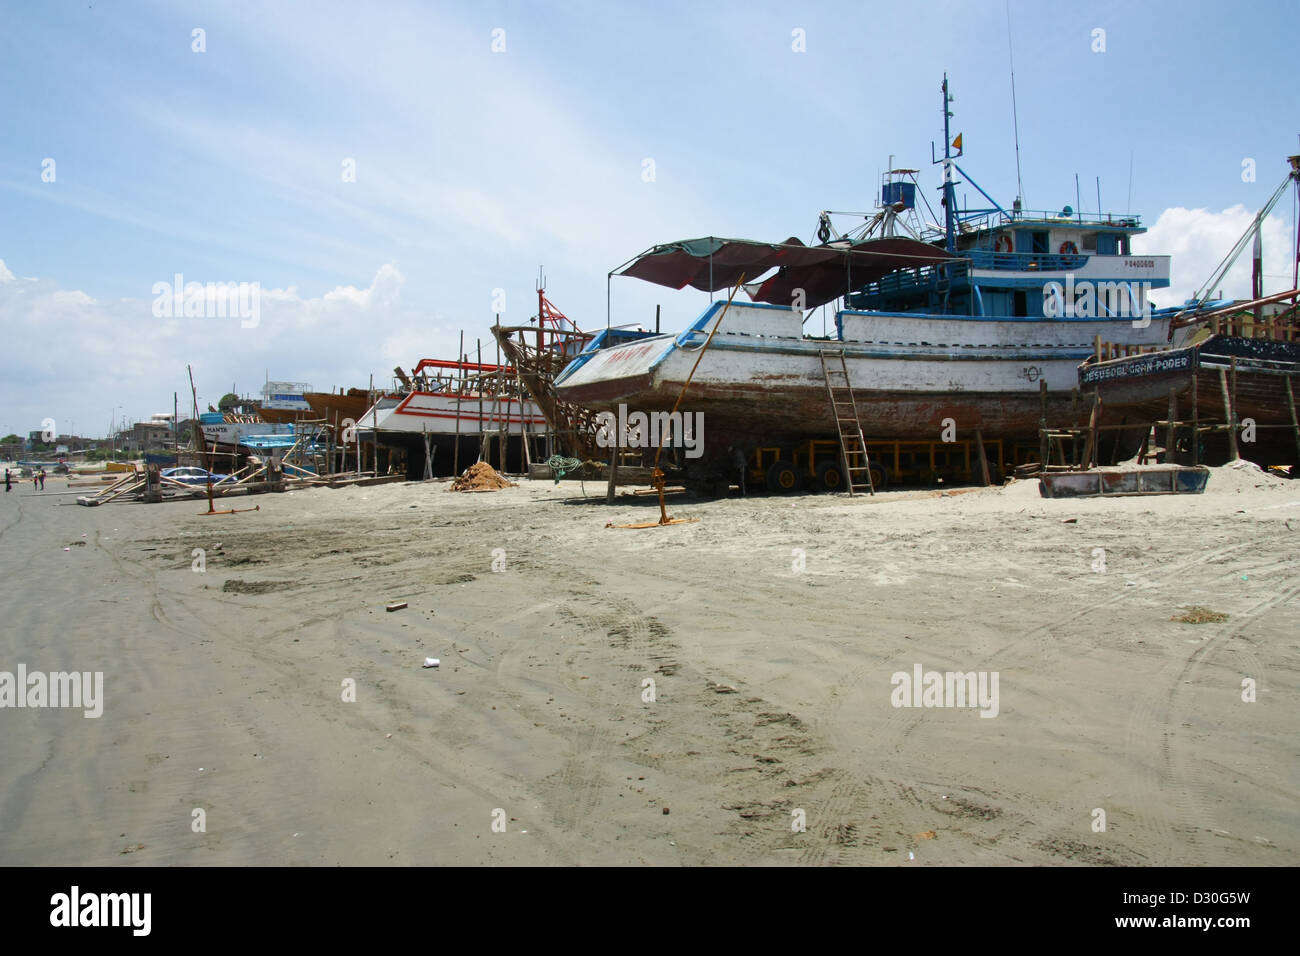 Navi in legno in costruzione su una spiaggia in Ecuador. Foto Stock